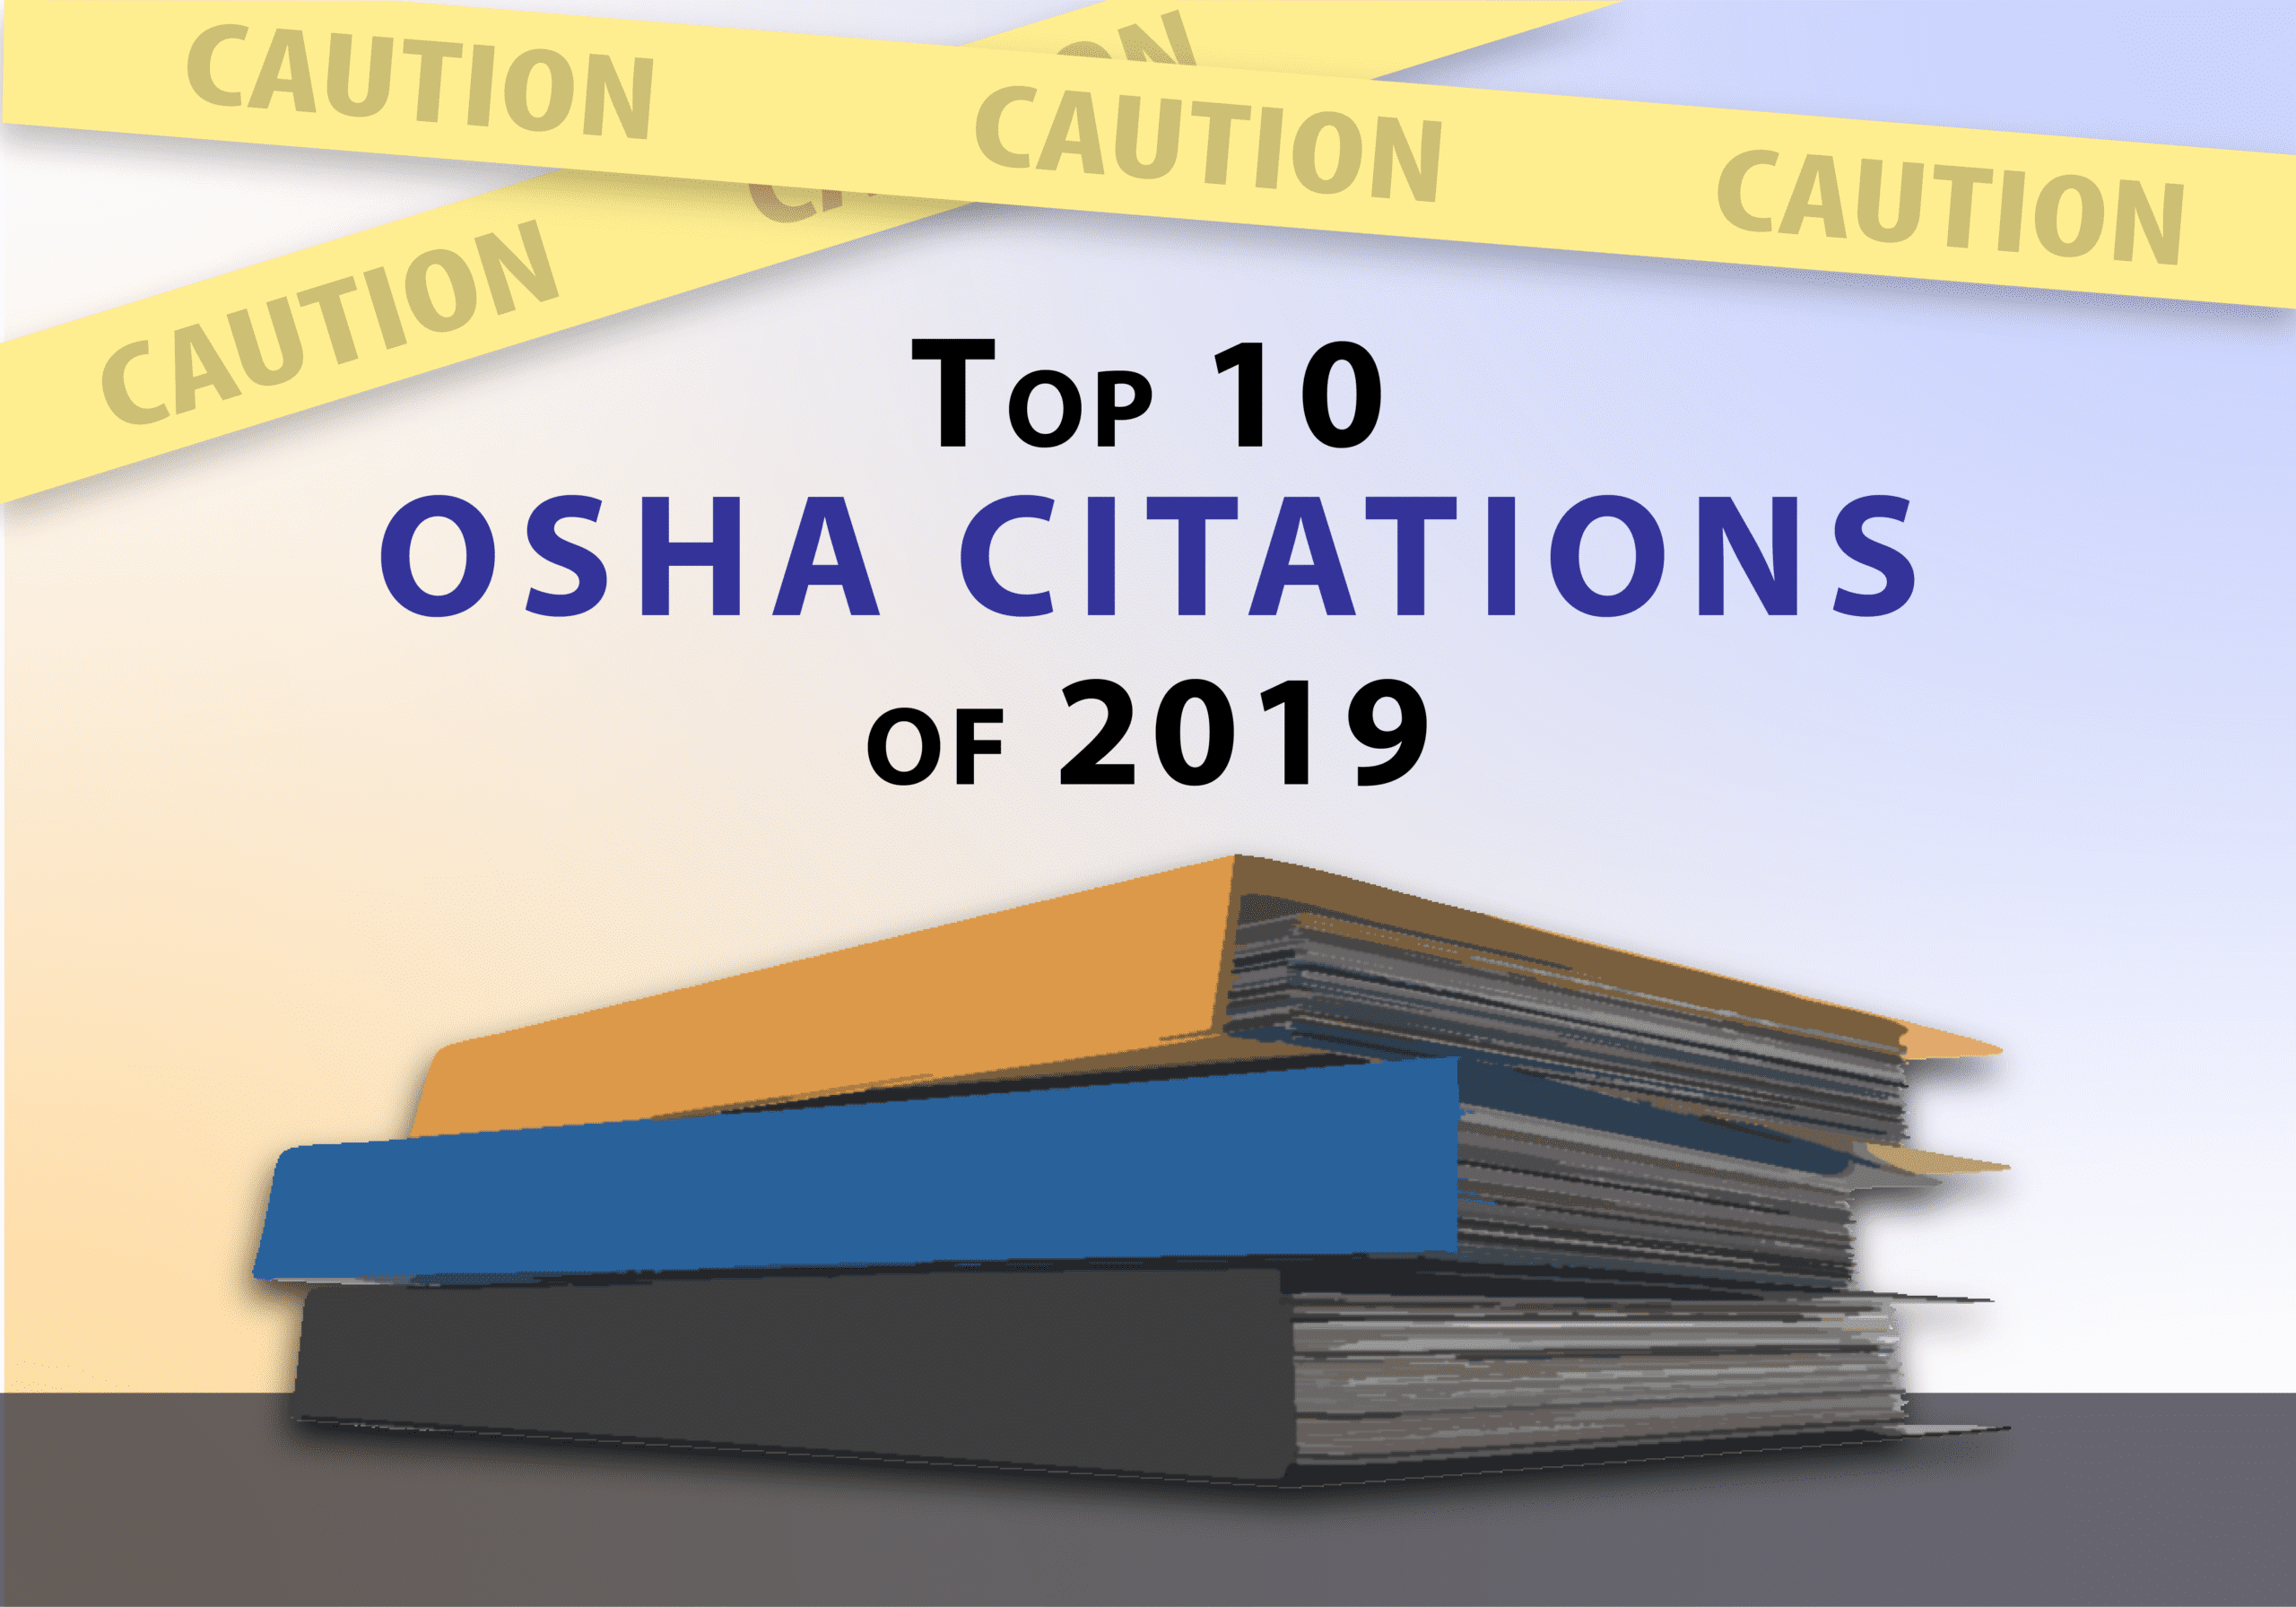 OSHA’s Top 10 List of Citations for 2019